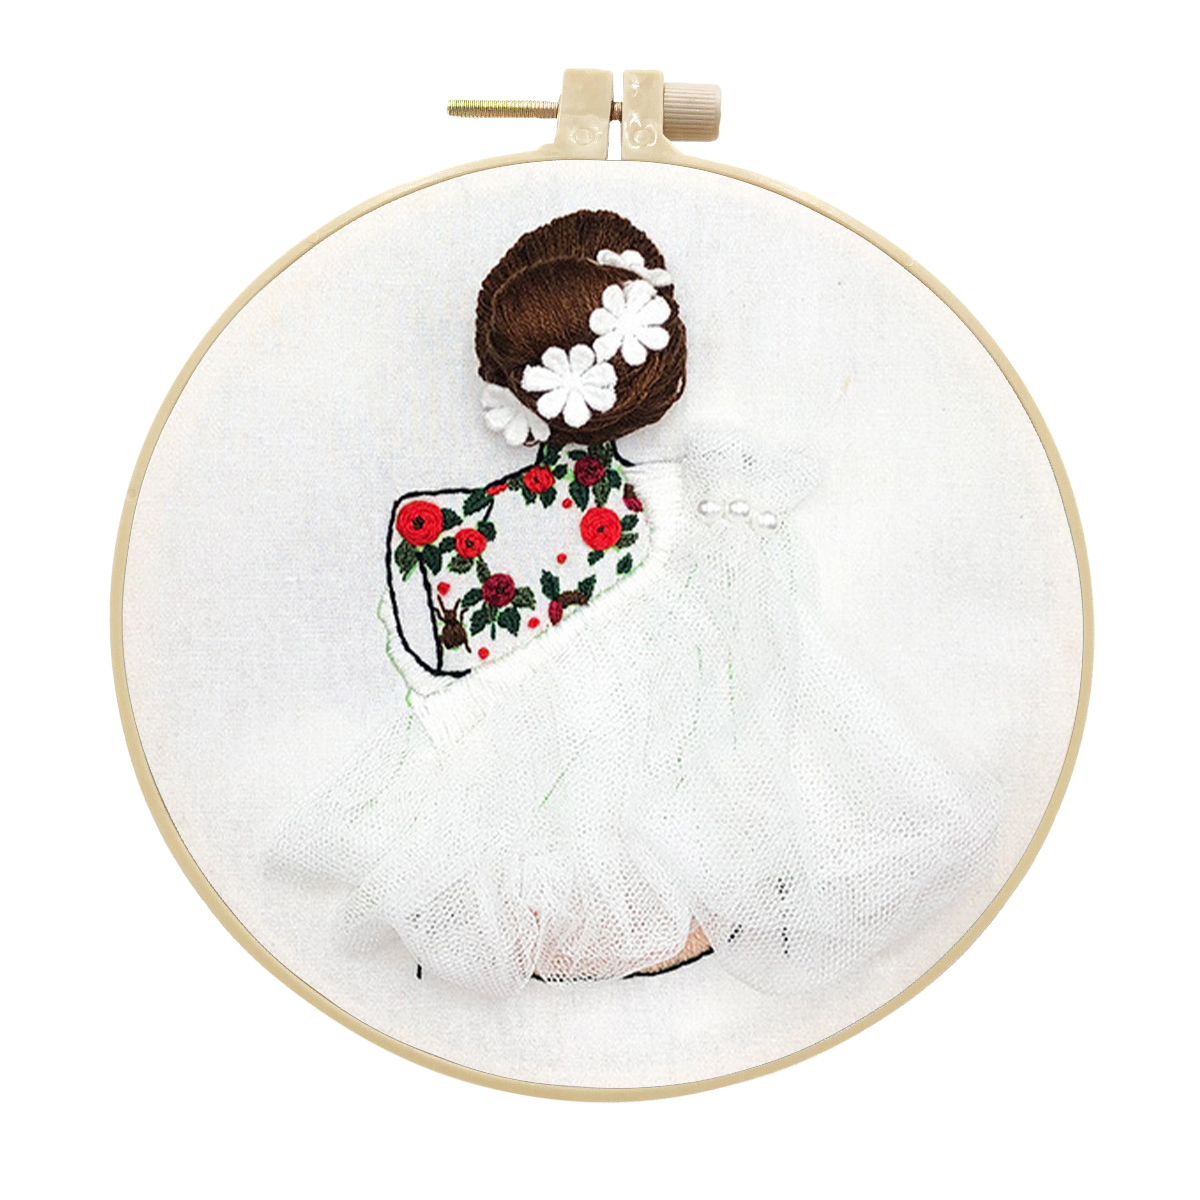 Handmade Embroidery Kit Cross stitch kit for Adult Beginner - Wedding Girl Pattern